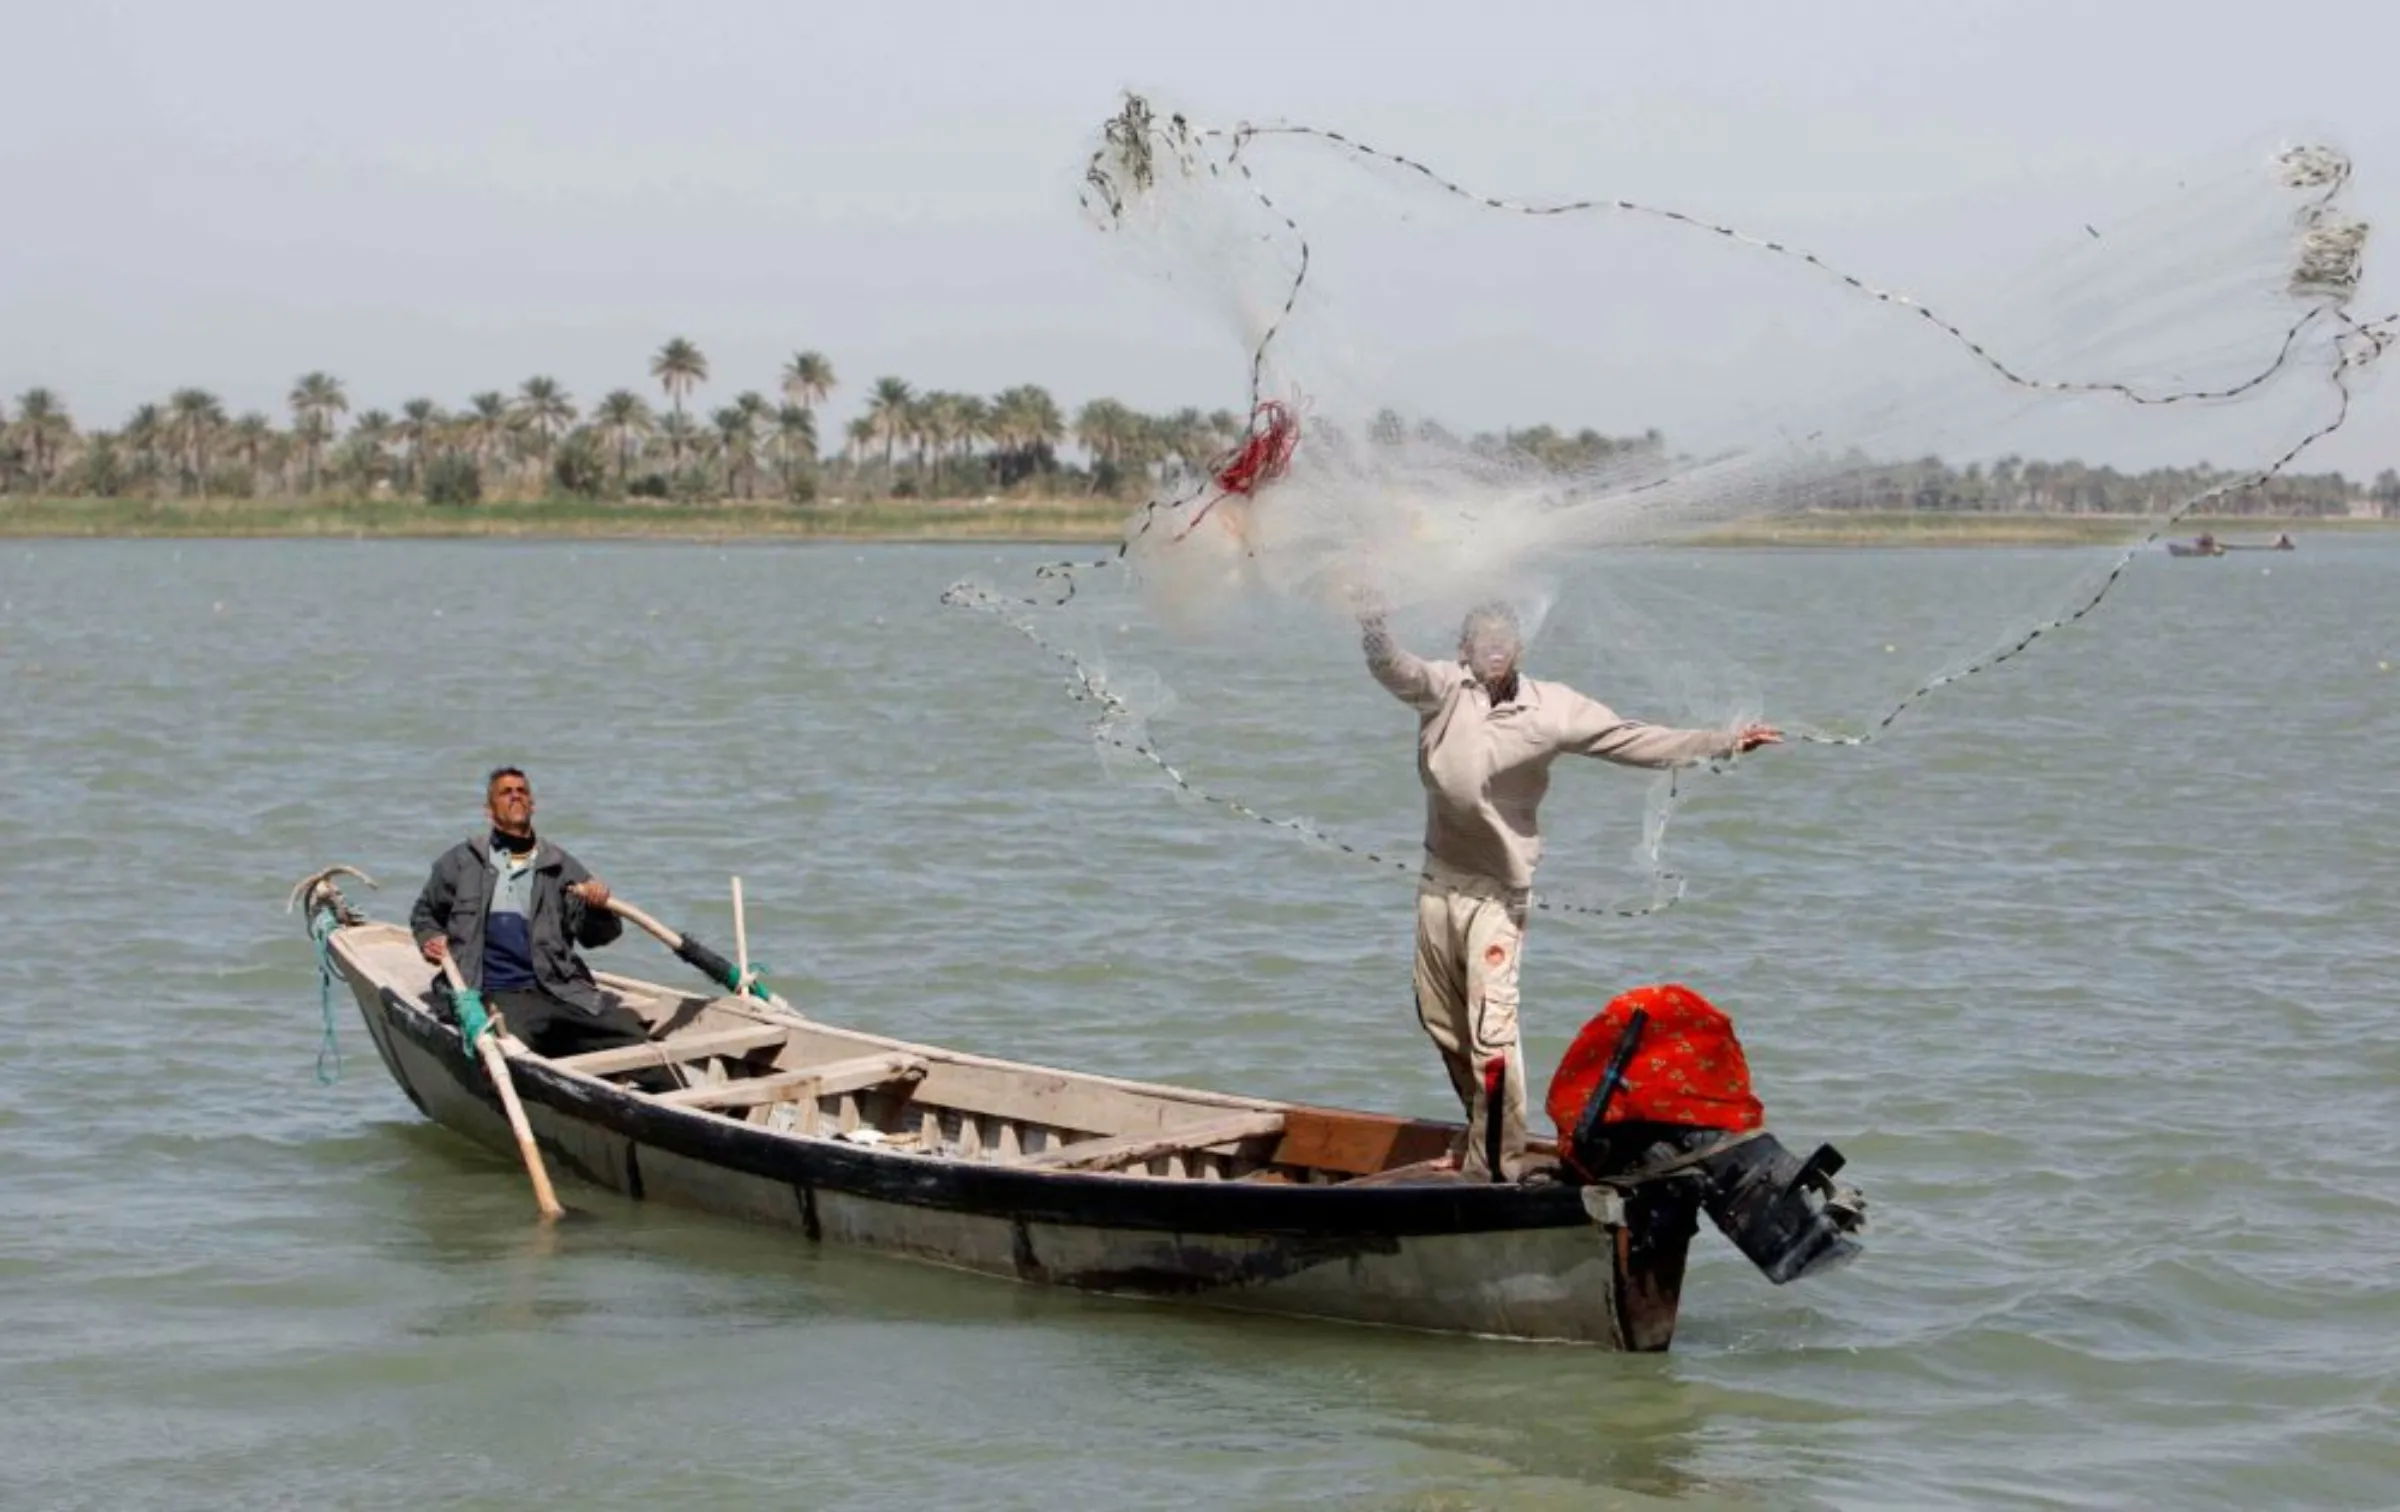 Decline of the Tigris spells doom for Iraqi fishermen